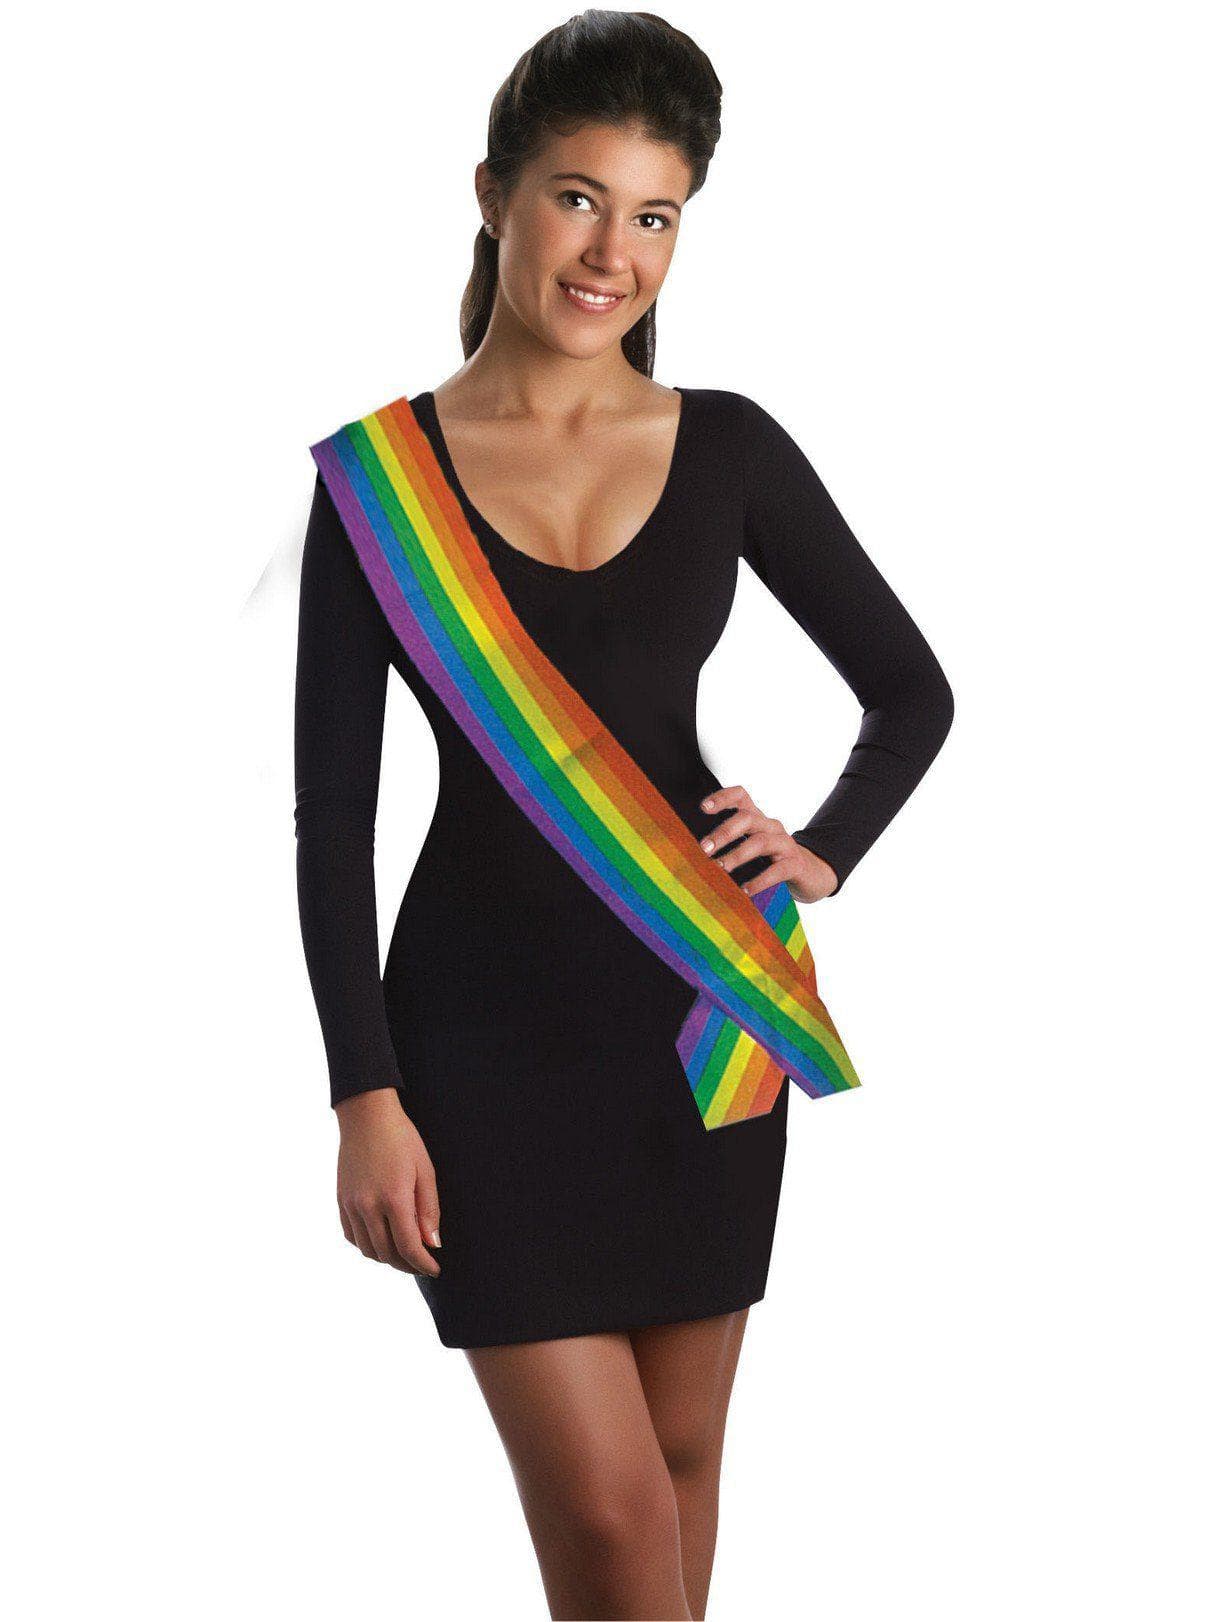 Rainbow Sash Accessory - costumes.com